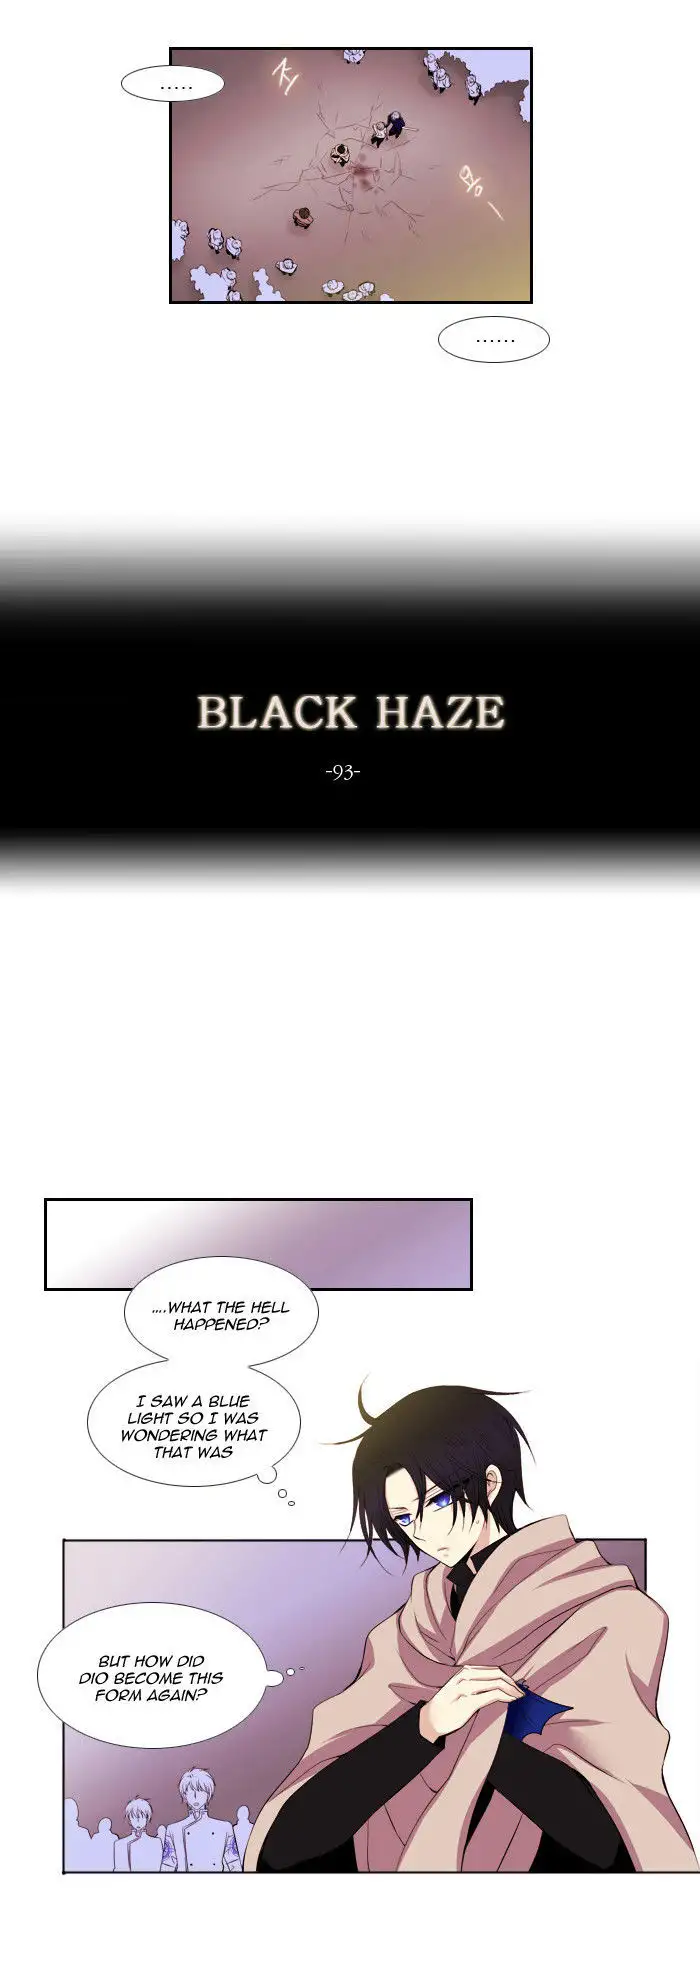 Black Haze - Chapter 93 Page 2